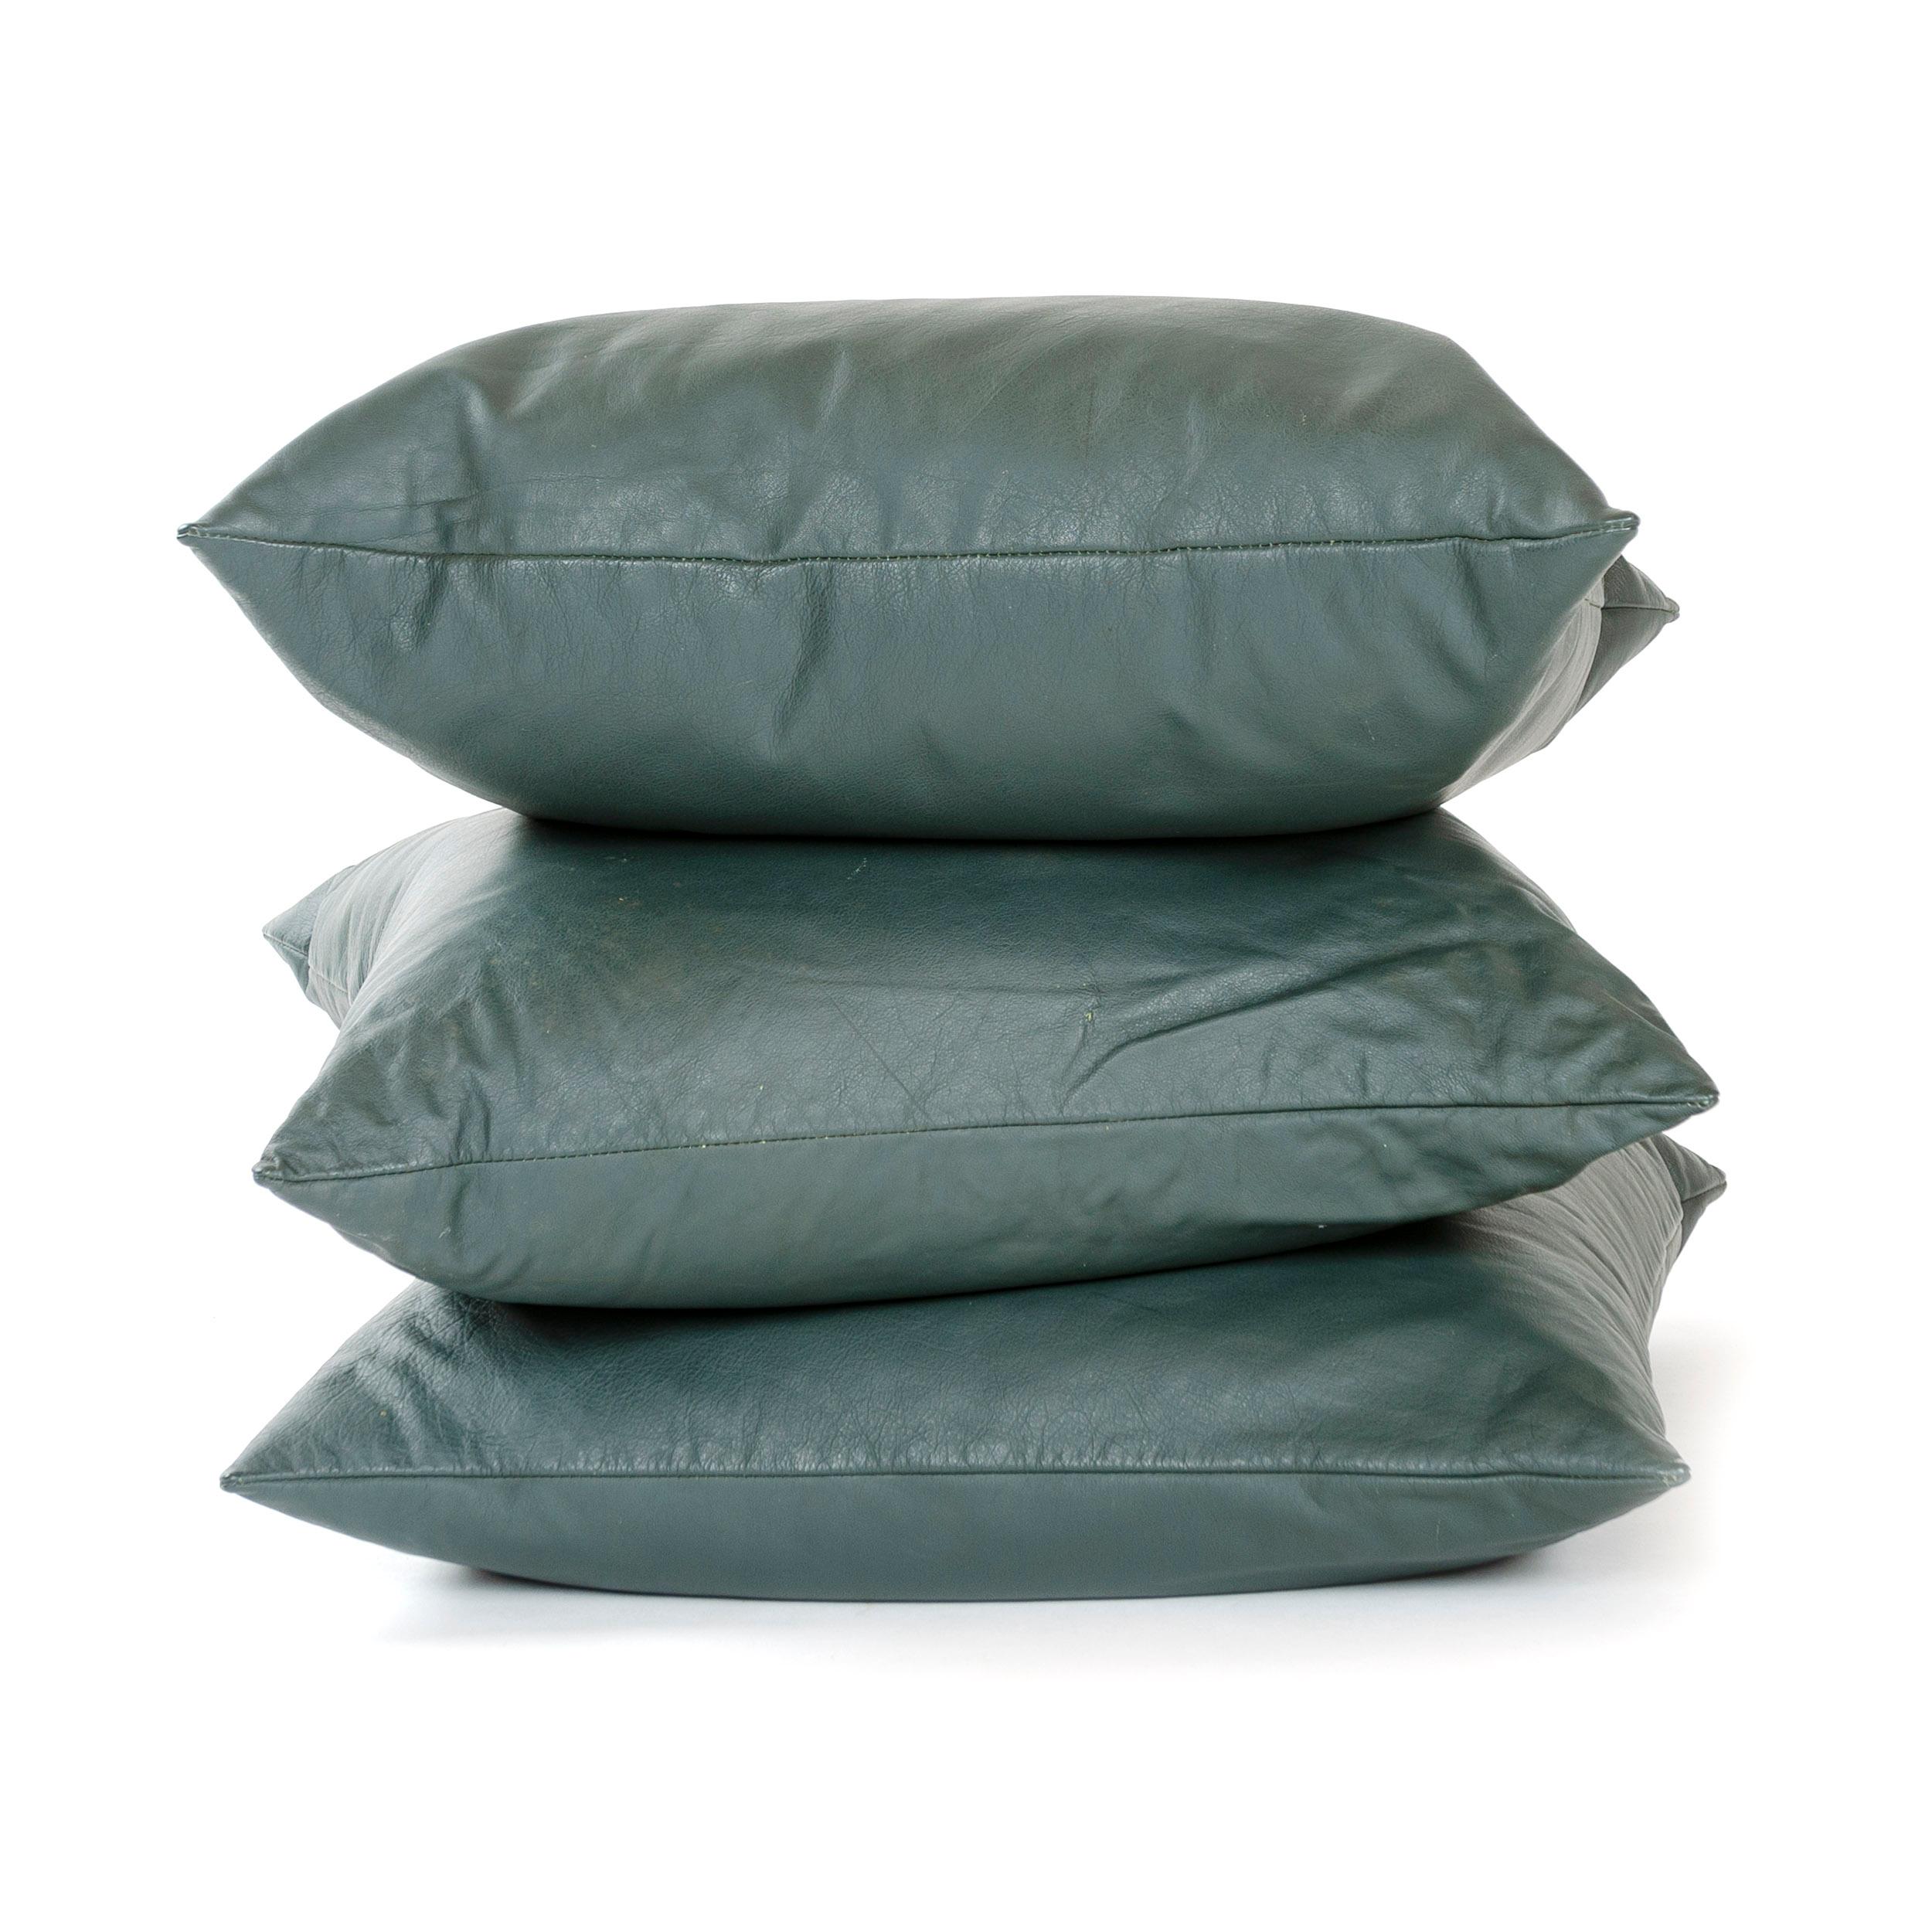 A handmade green leather pillow.